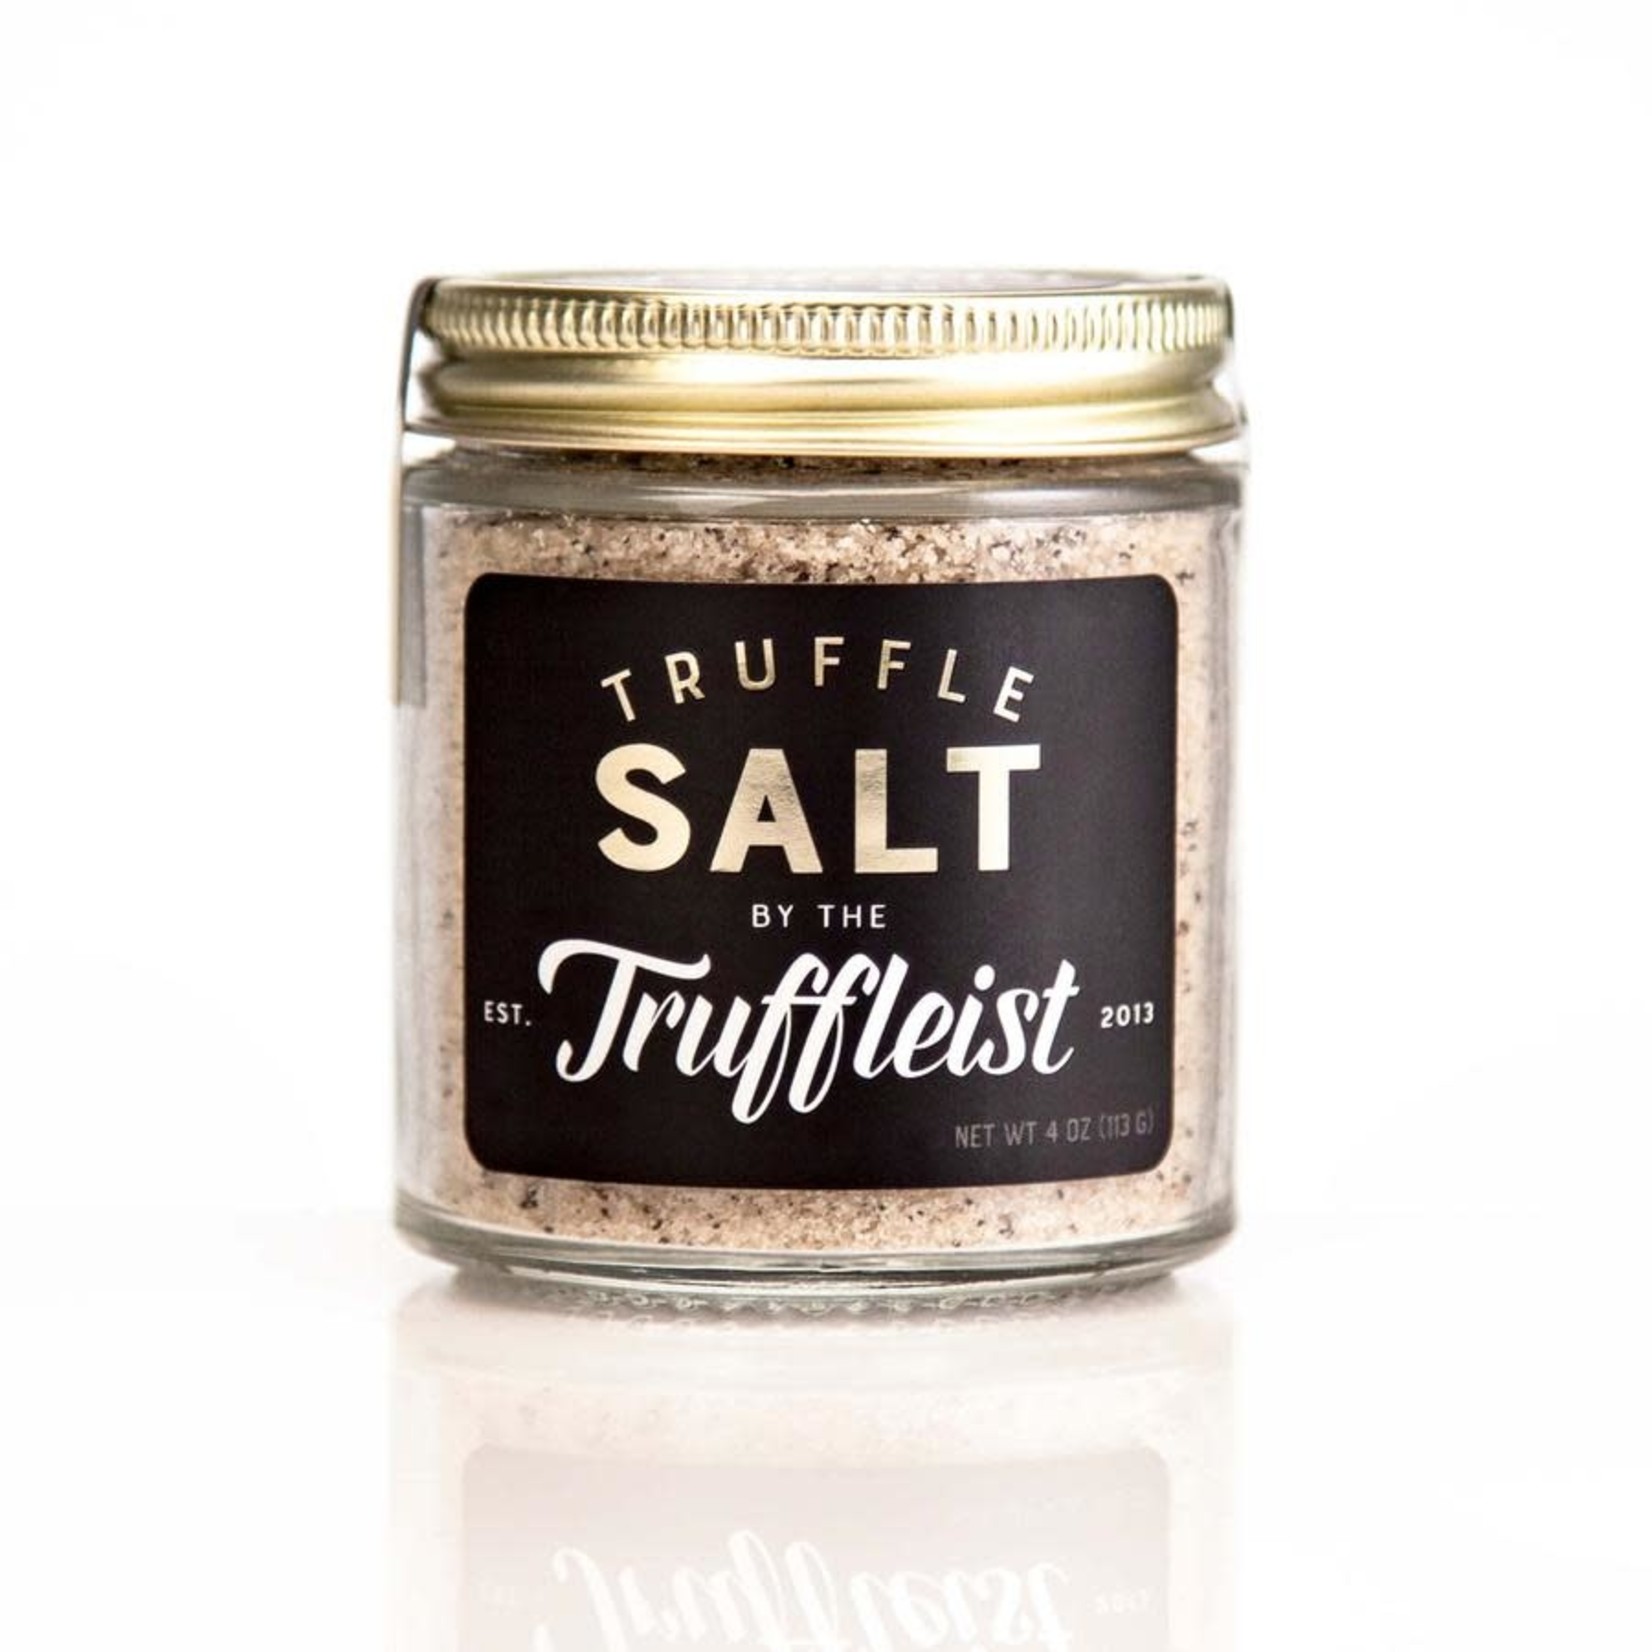 The Truffleist Truffle Salt